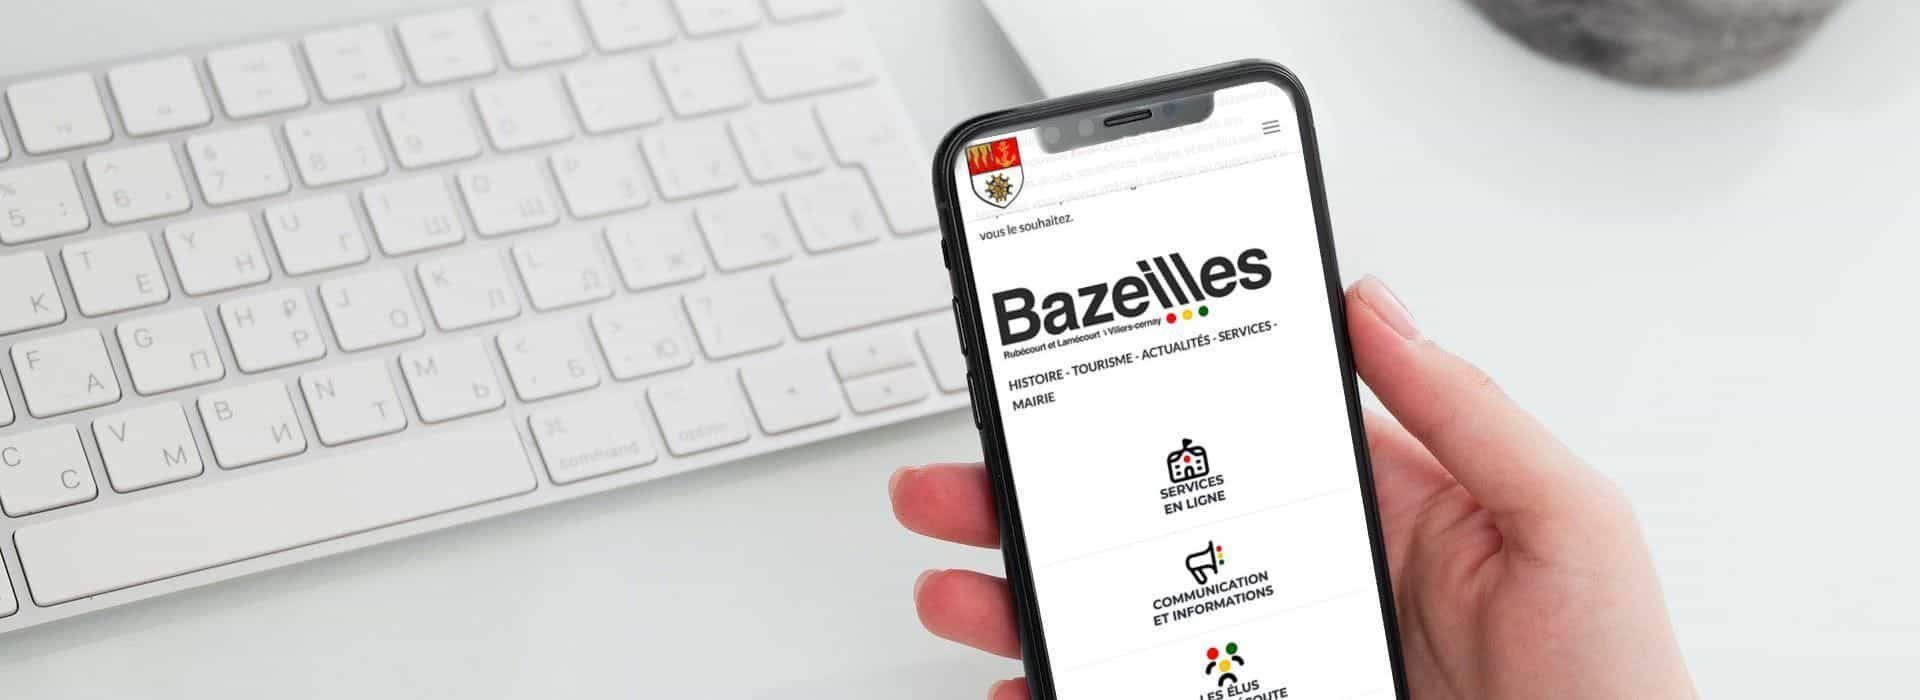 BAZEILLES site officiel bazeilles.com - Ardennes